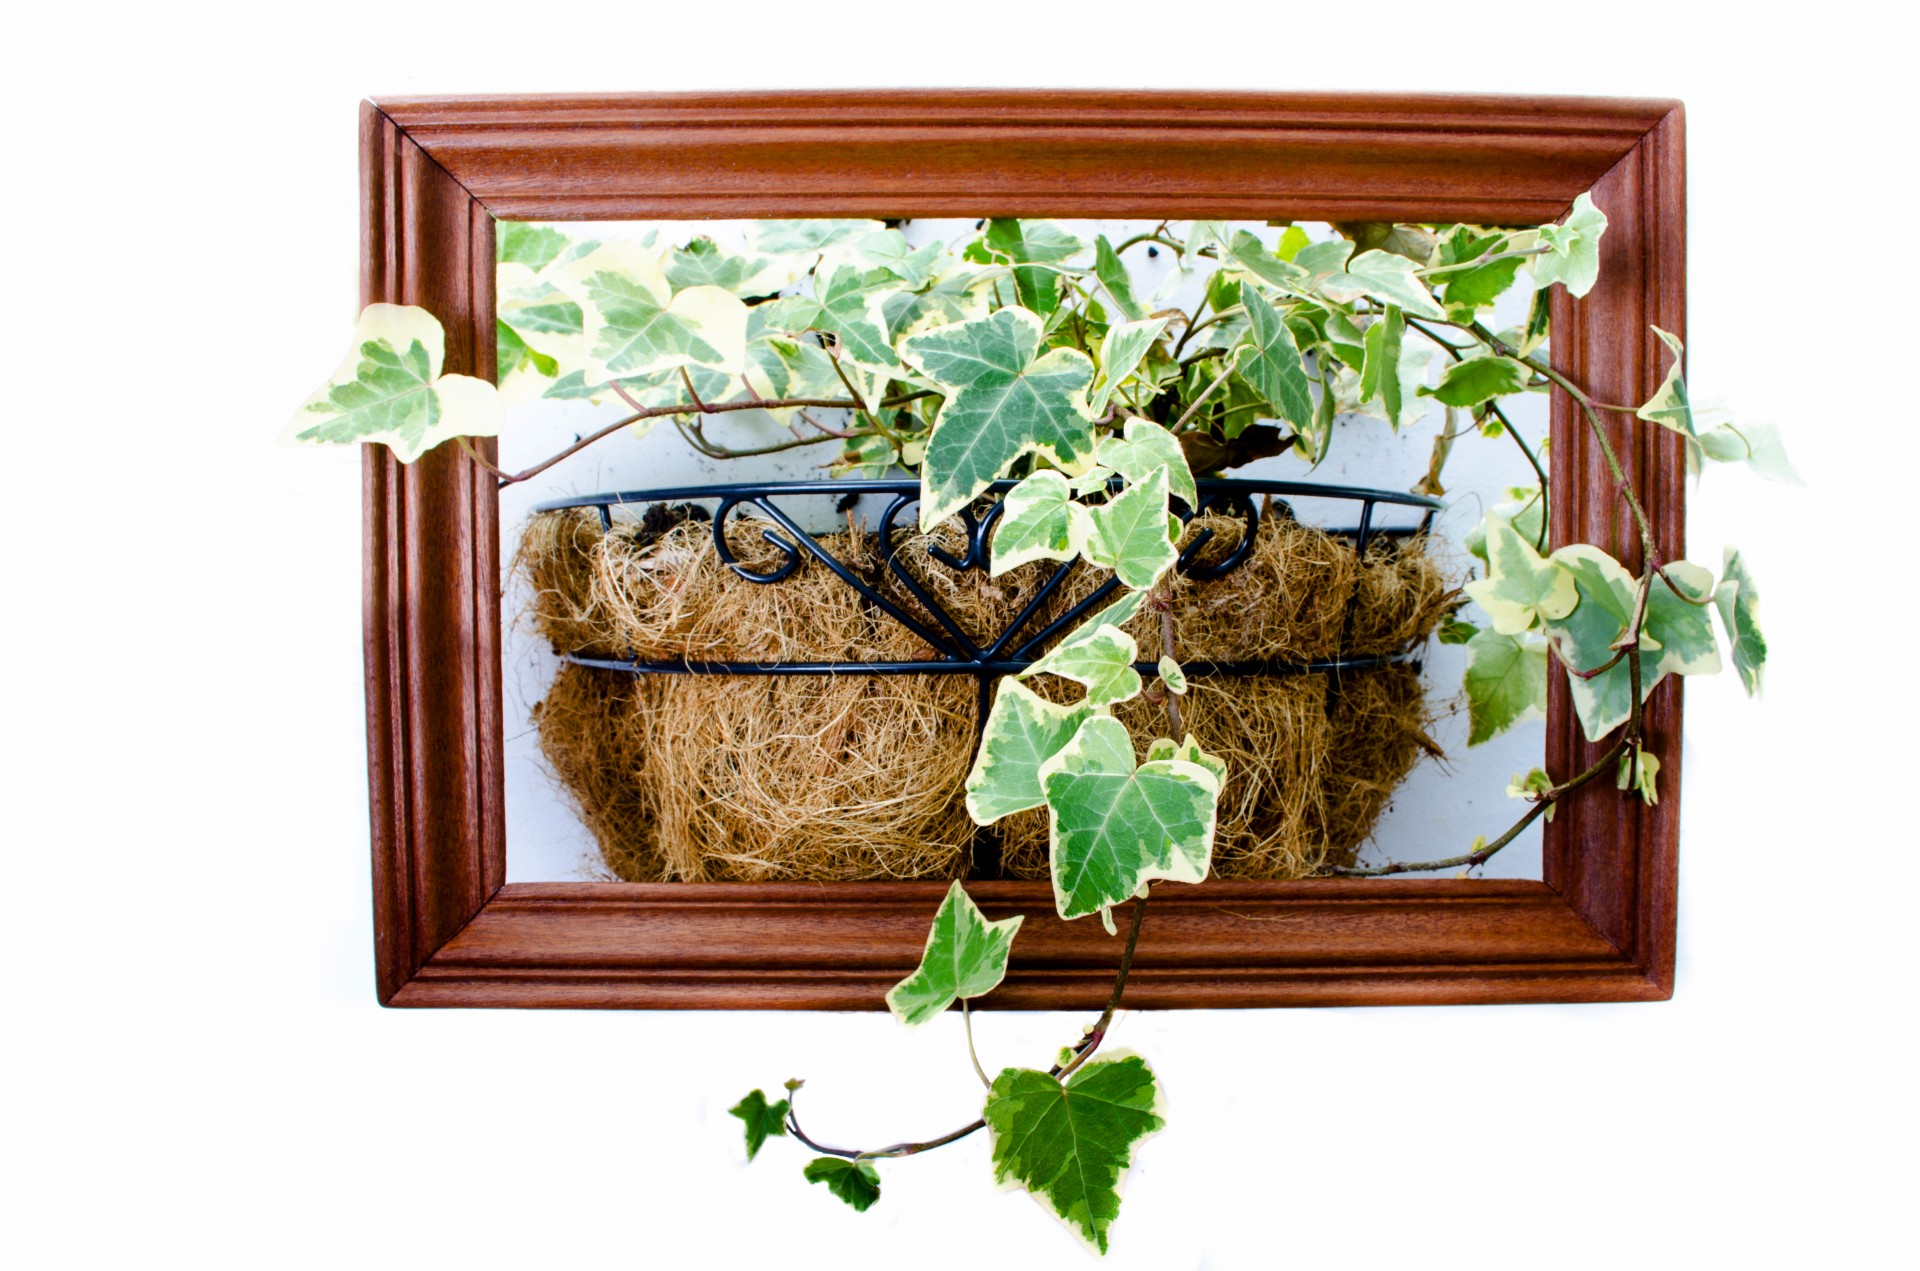 Plants in a DIY wooden frame planter